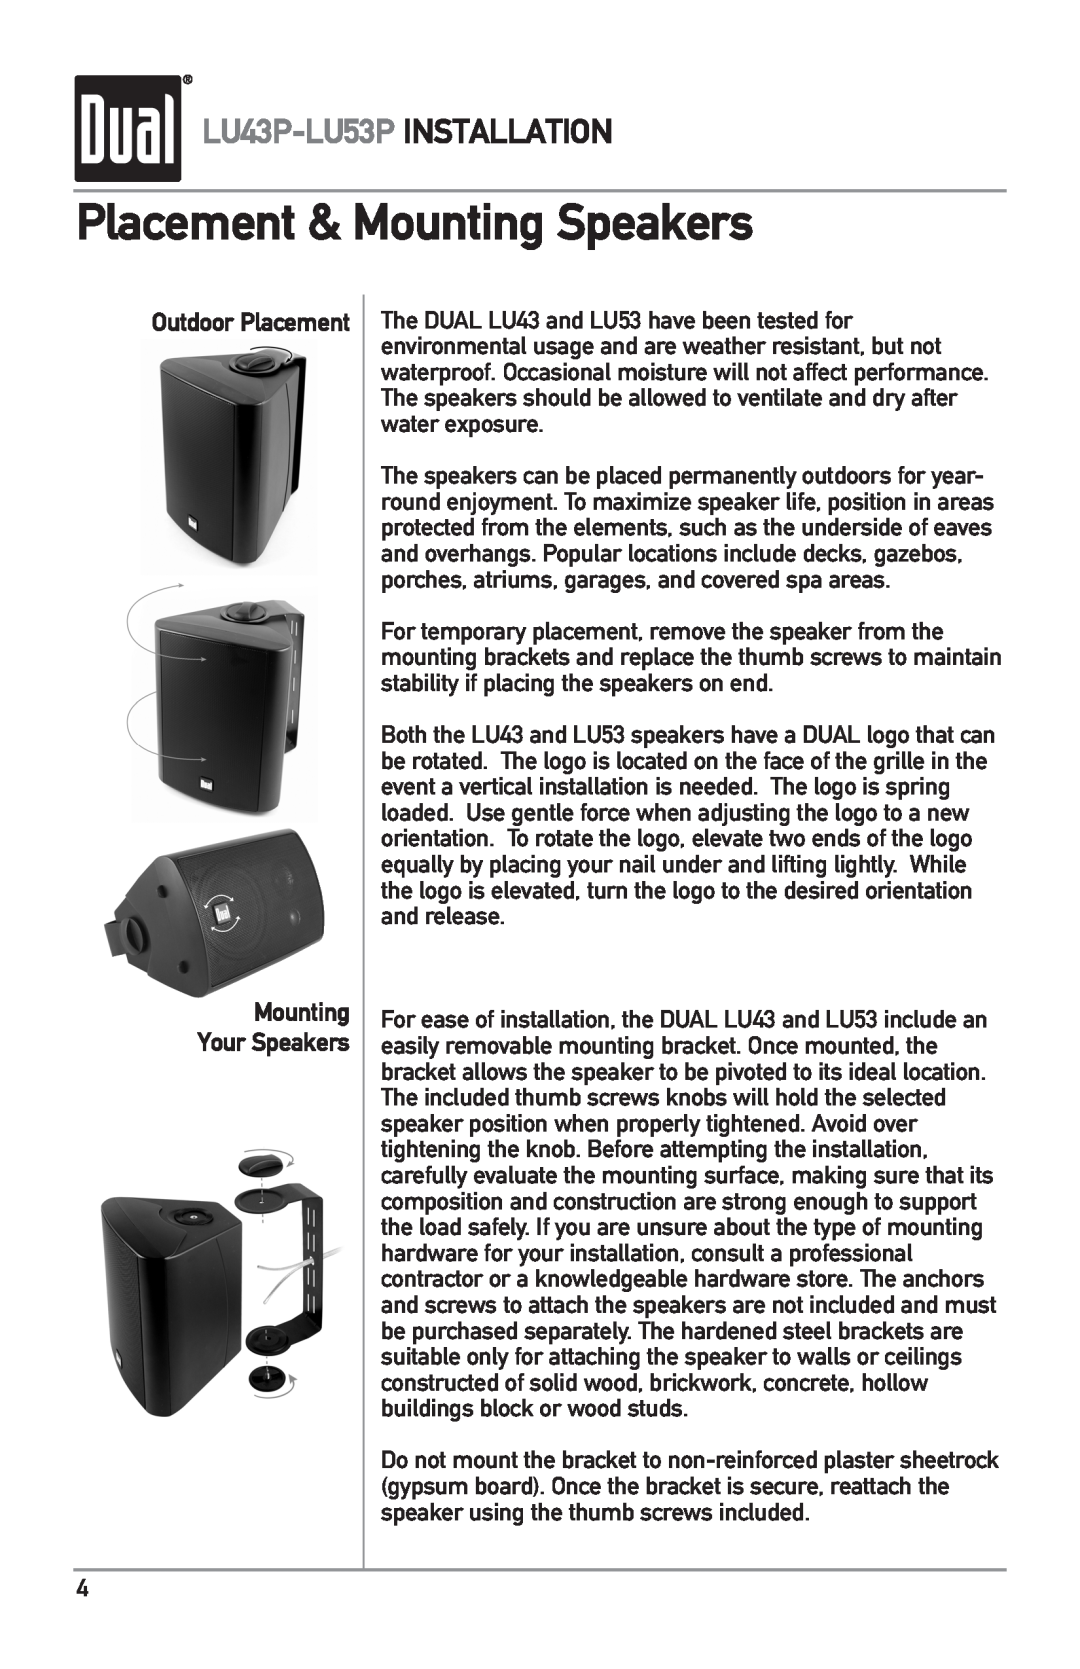 Dual LU43PW owner manual Placement & Mounting Speakers, LU43P-LU53P INSTALLATION 